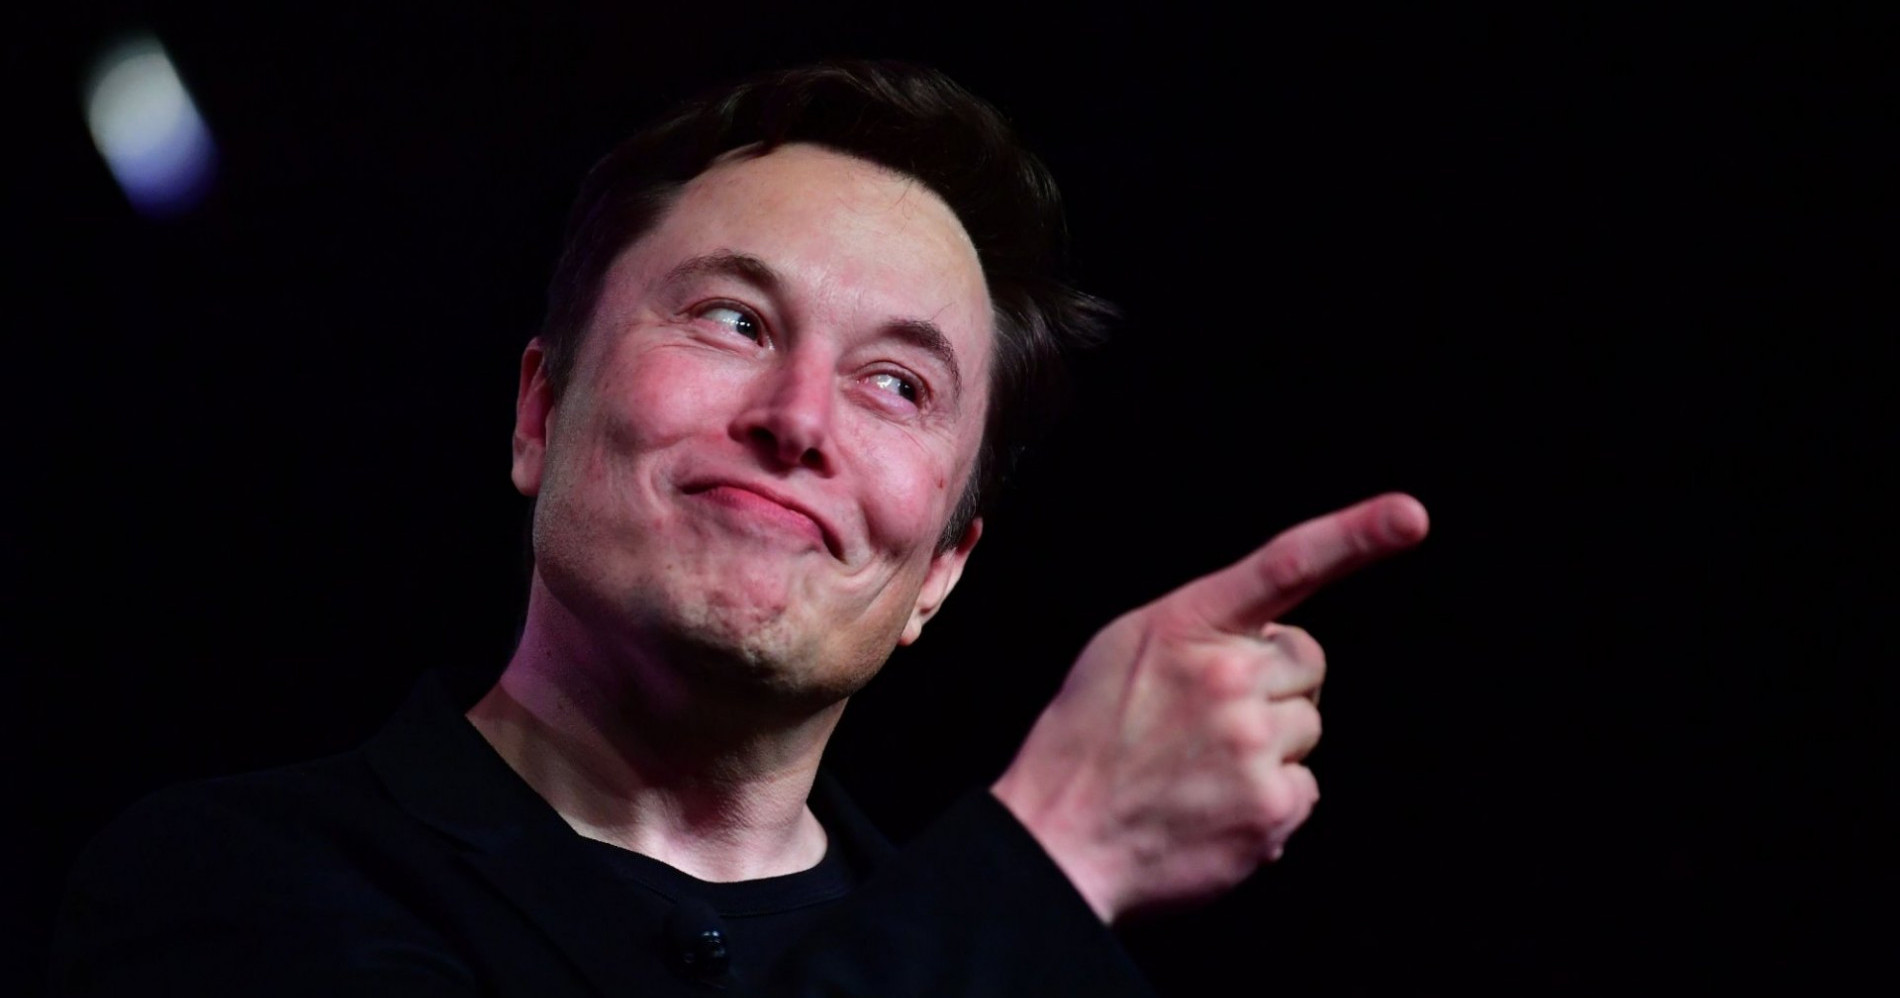 Biografi Elon Musk